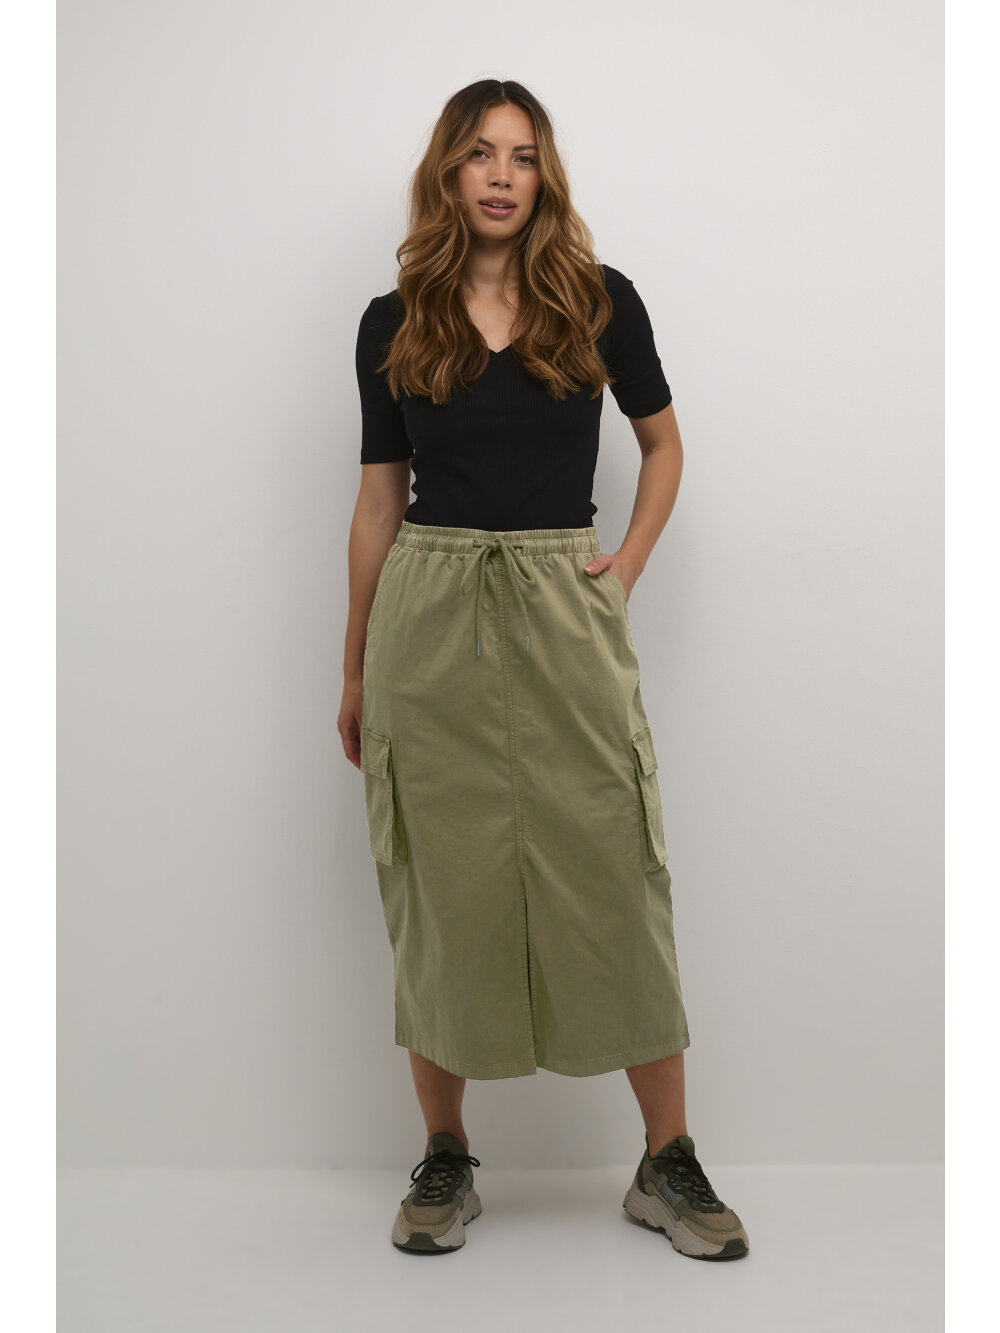 Culture - CUbrita Skirt